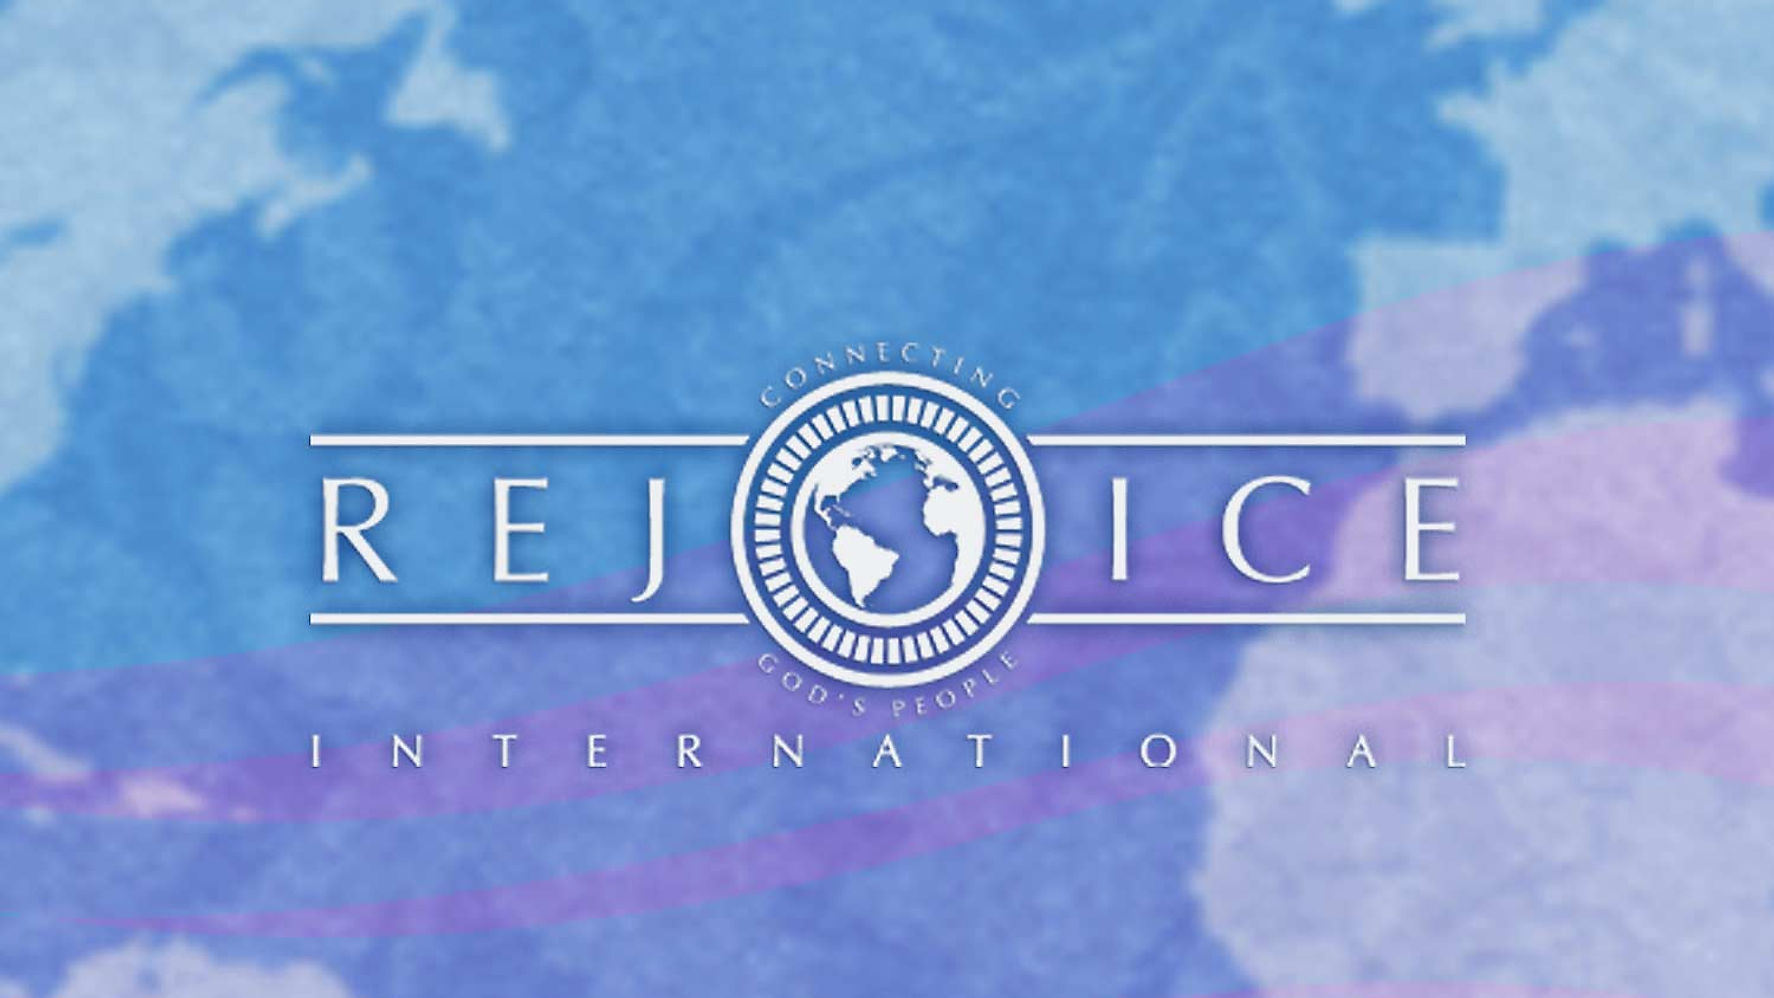 Rejoice International Network